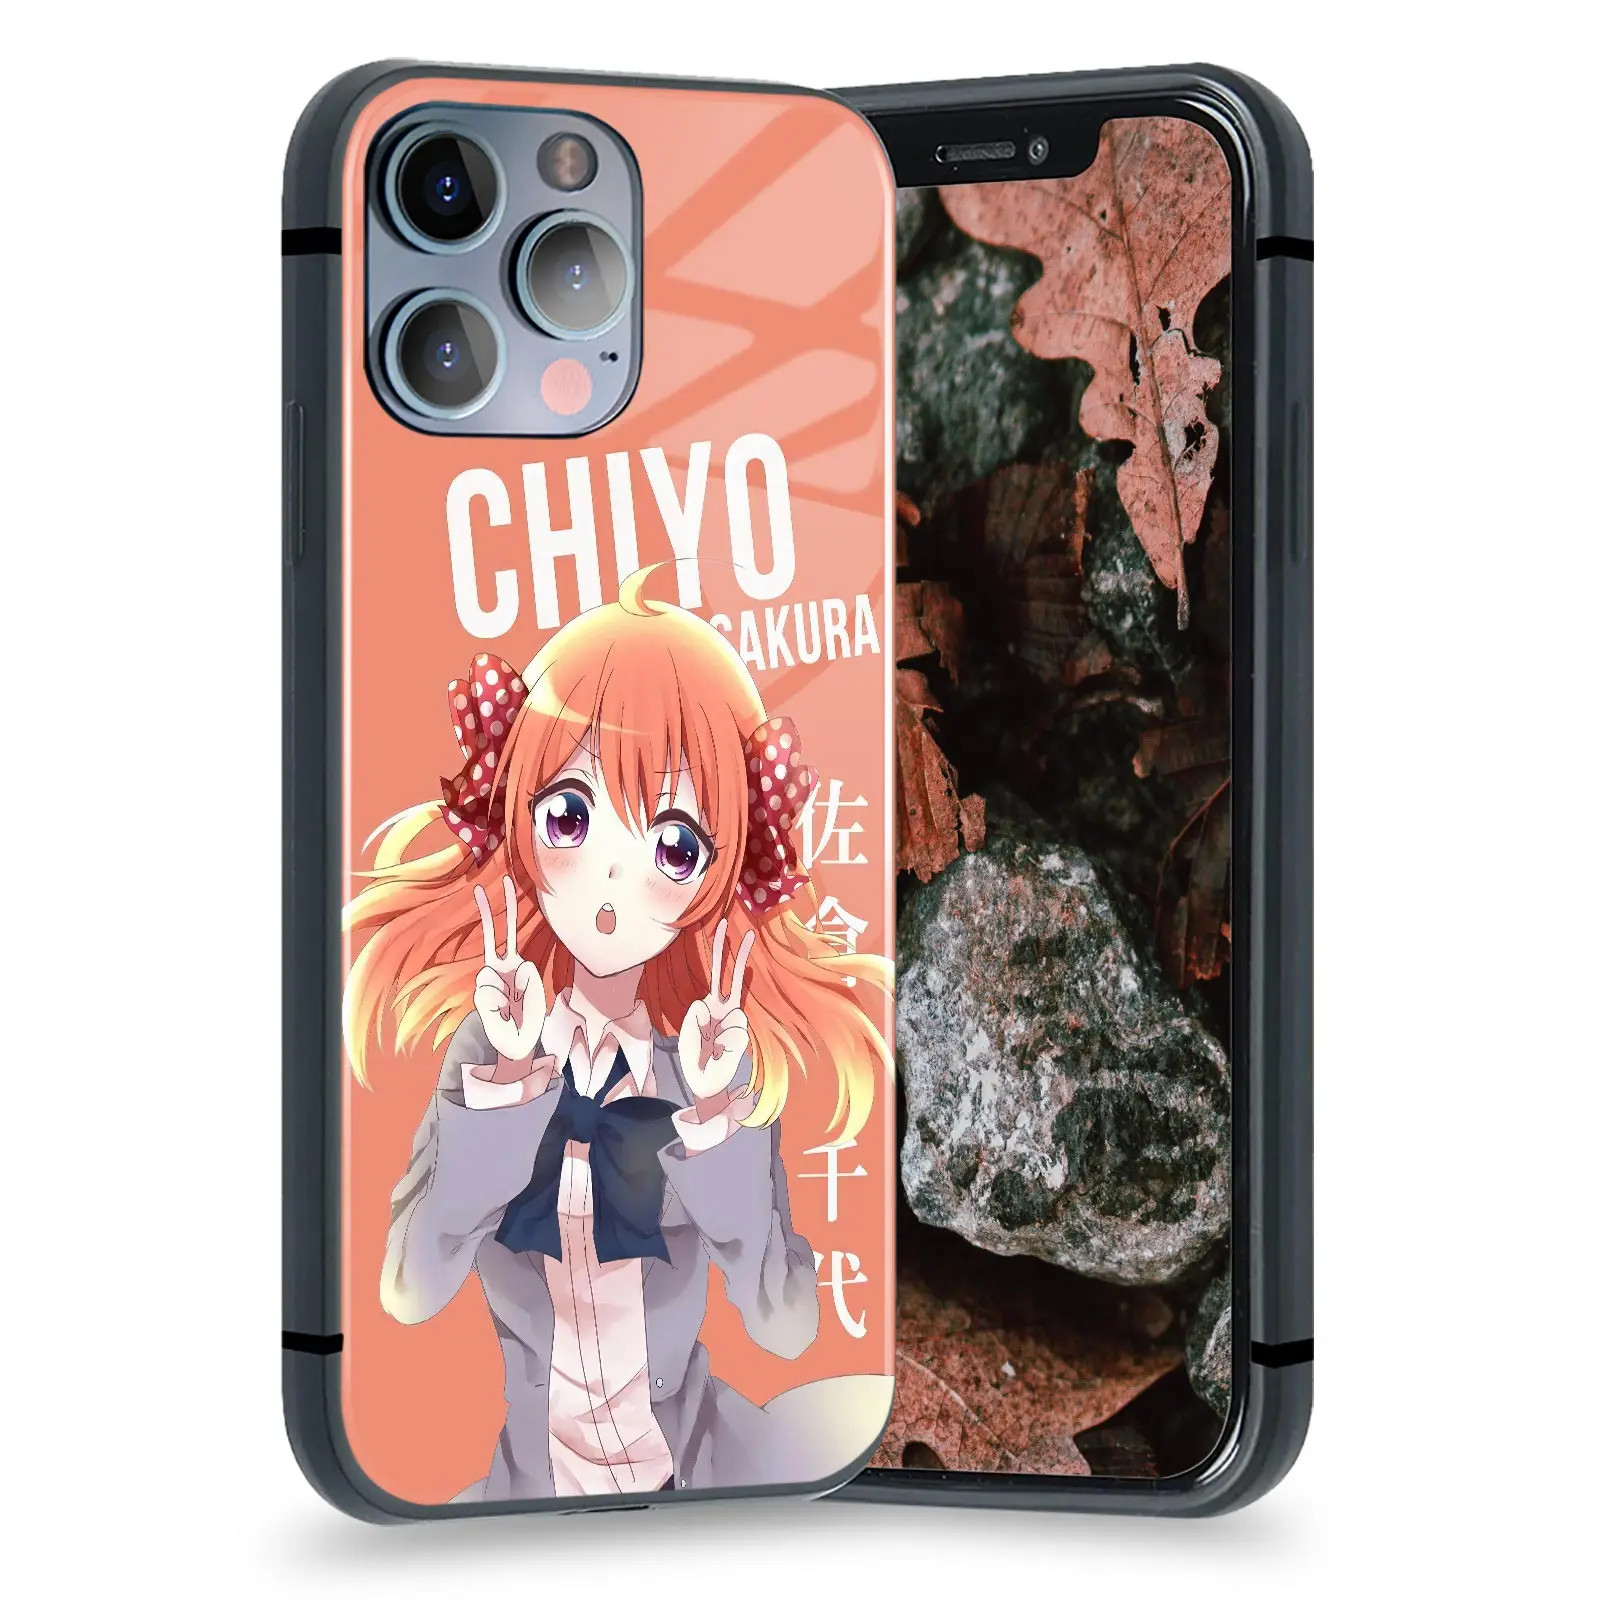 Chiyo Sakura Gekkan Shoujo Nozaki-kun Anime Soft Silicone Phone Case Cover for iPhone SE 7 8 Plus X XR XS 11 12 13 Mini Pro Max